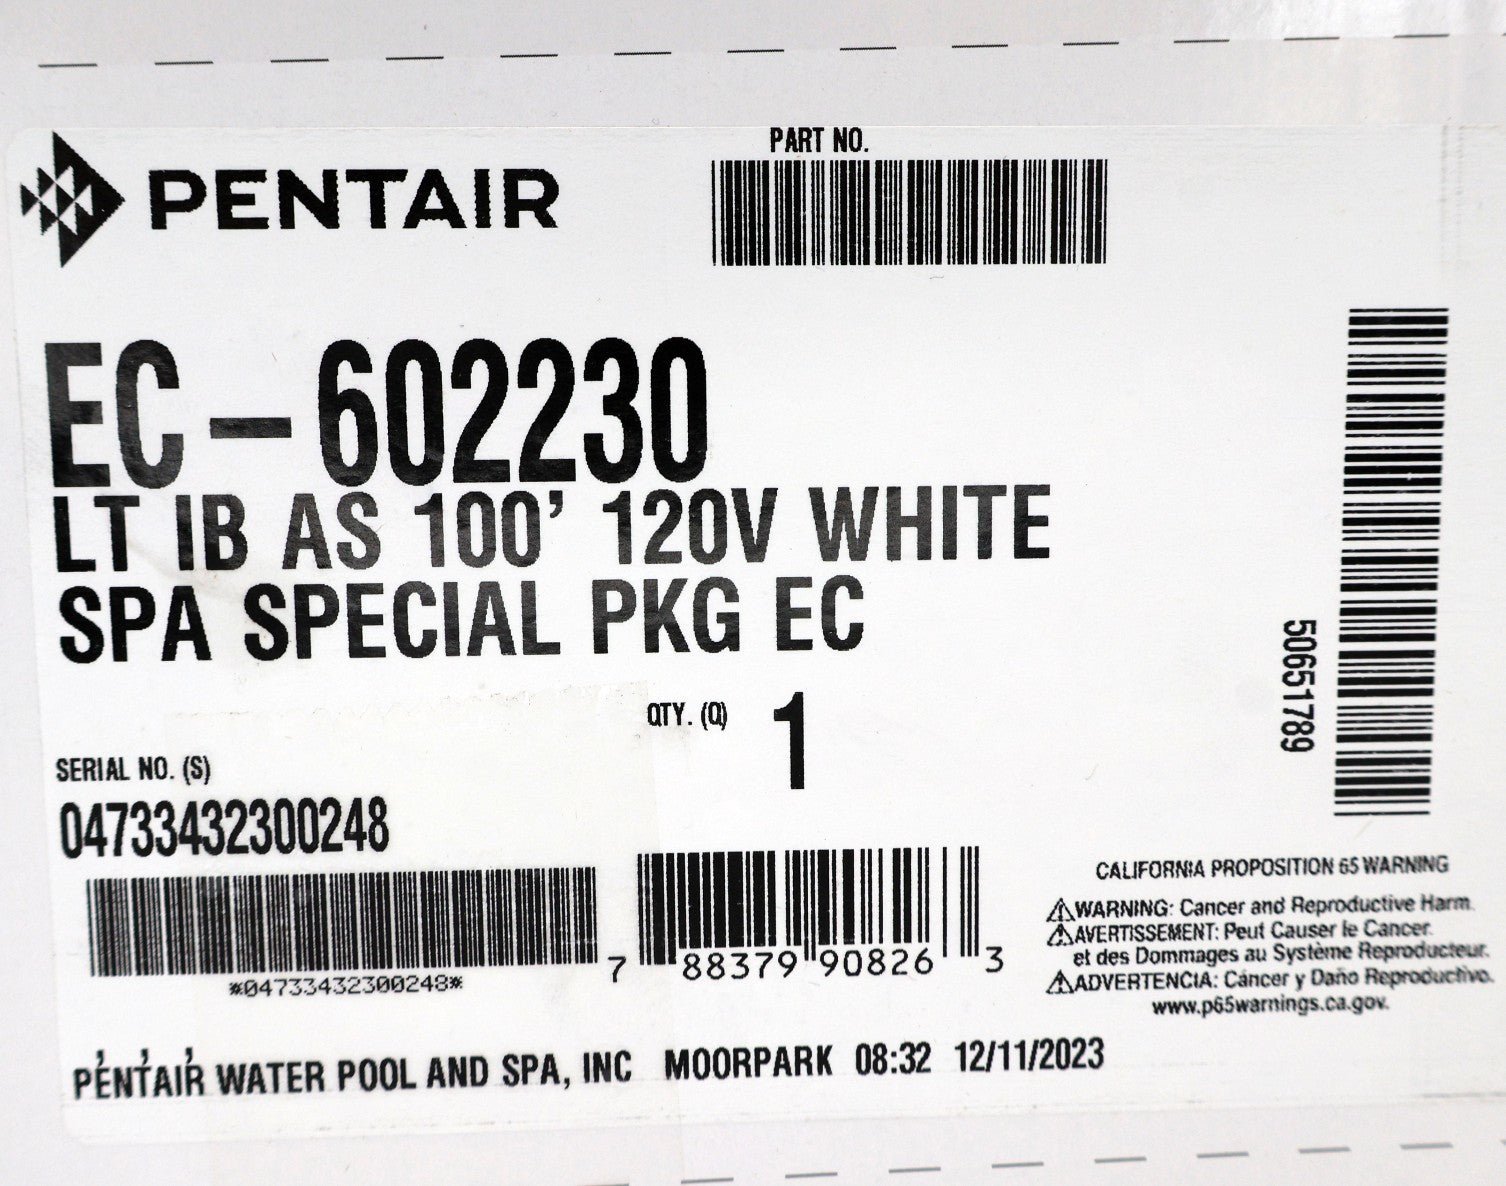 Pentair Intellibrite Architectural Series LED White Spa Light 100' 120V EC-602230 - Pool Lights - img-6